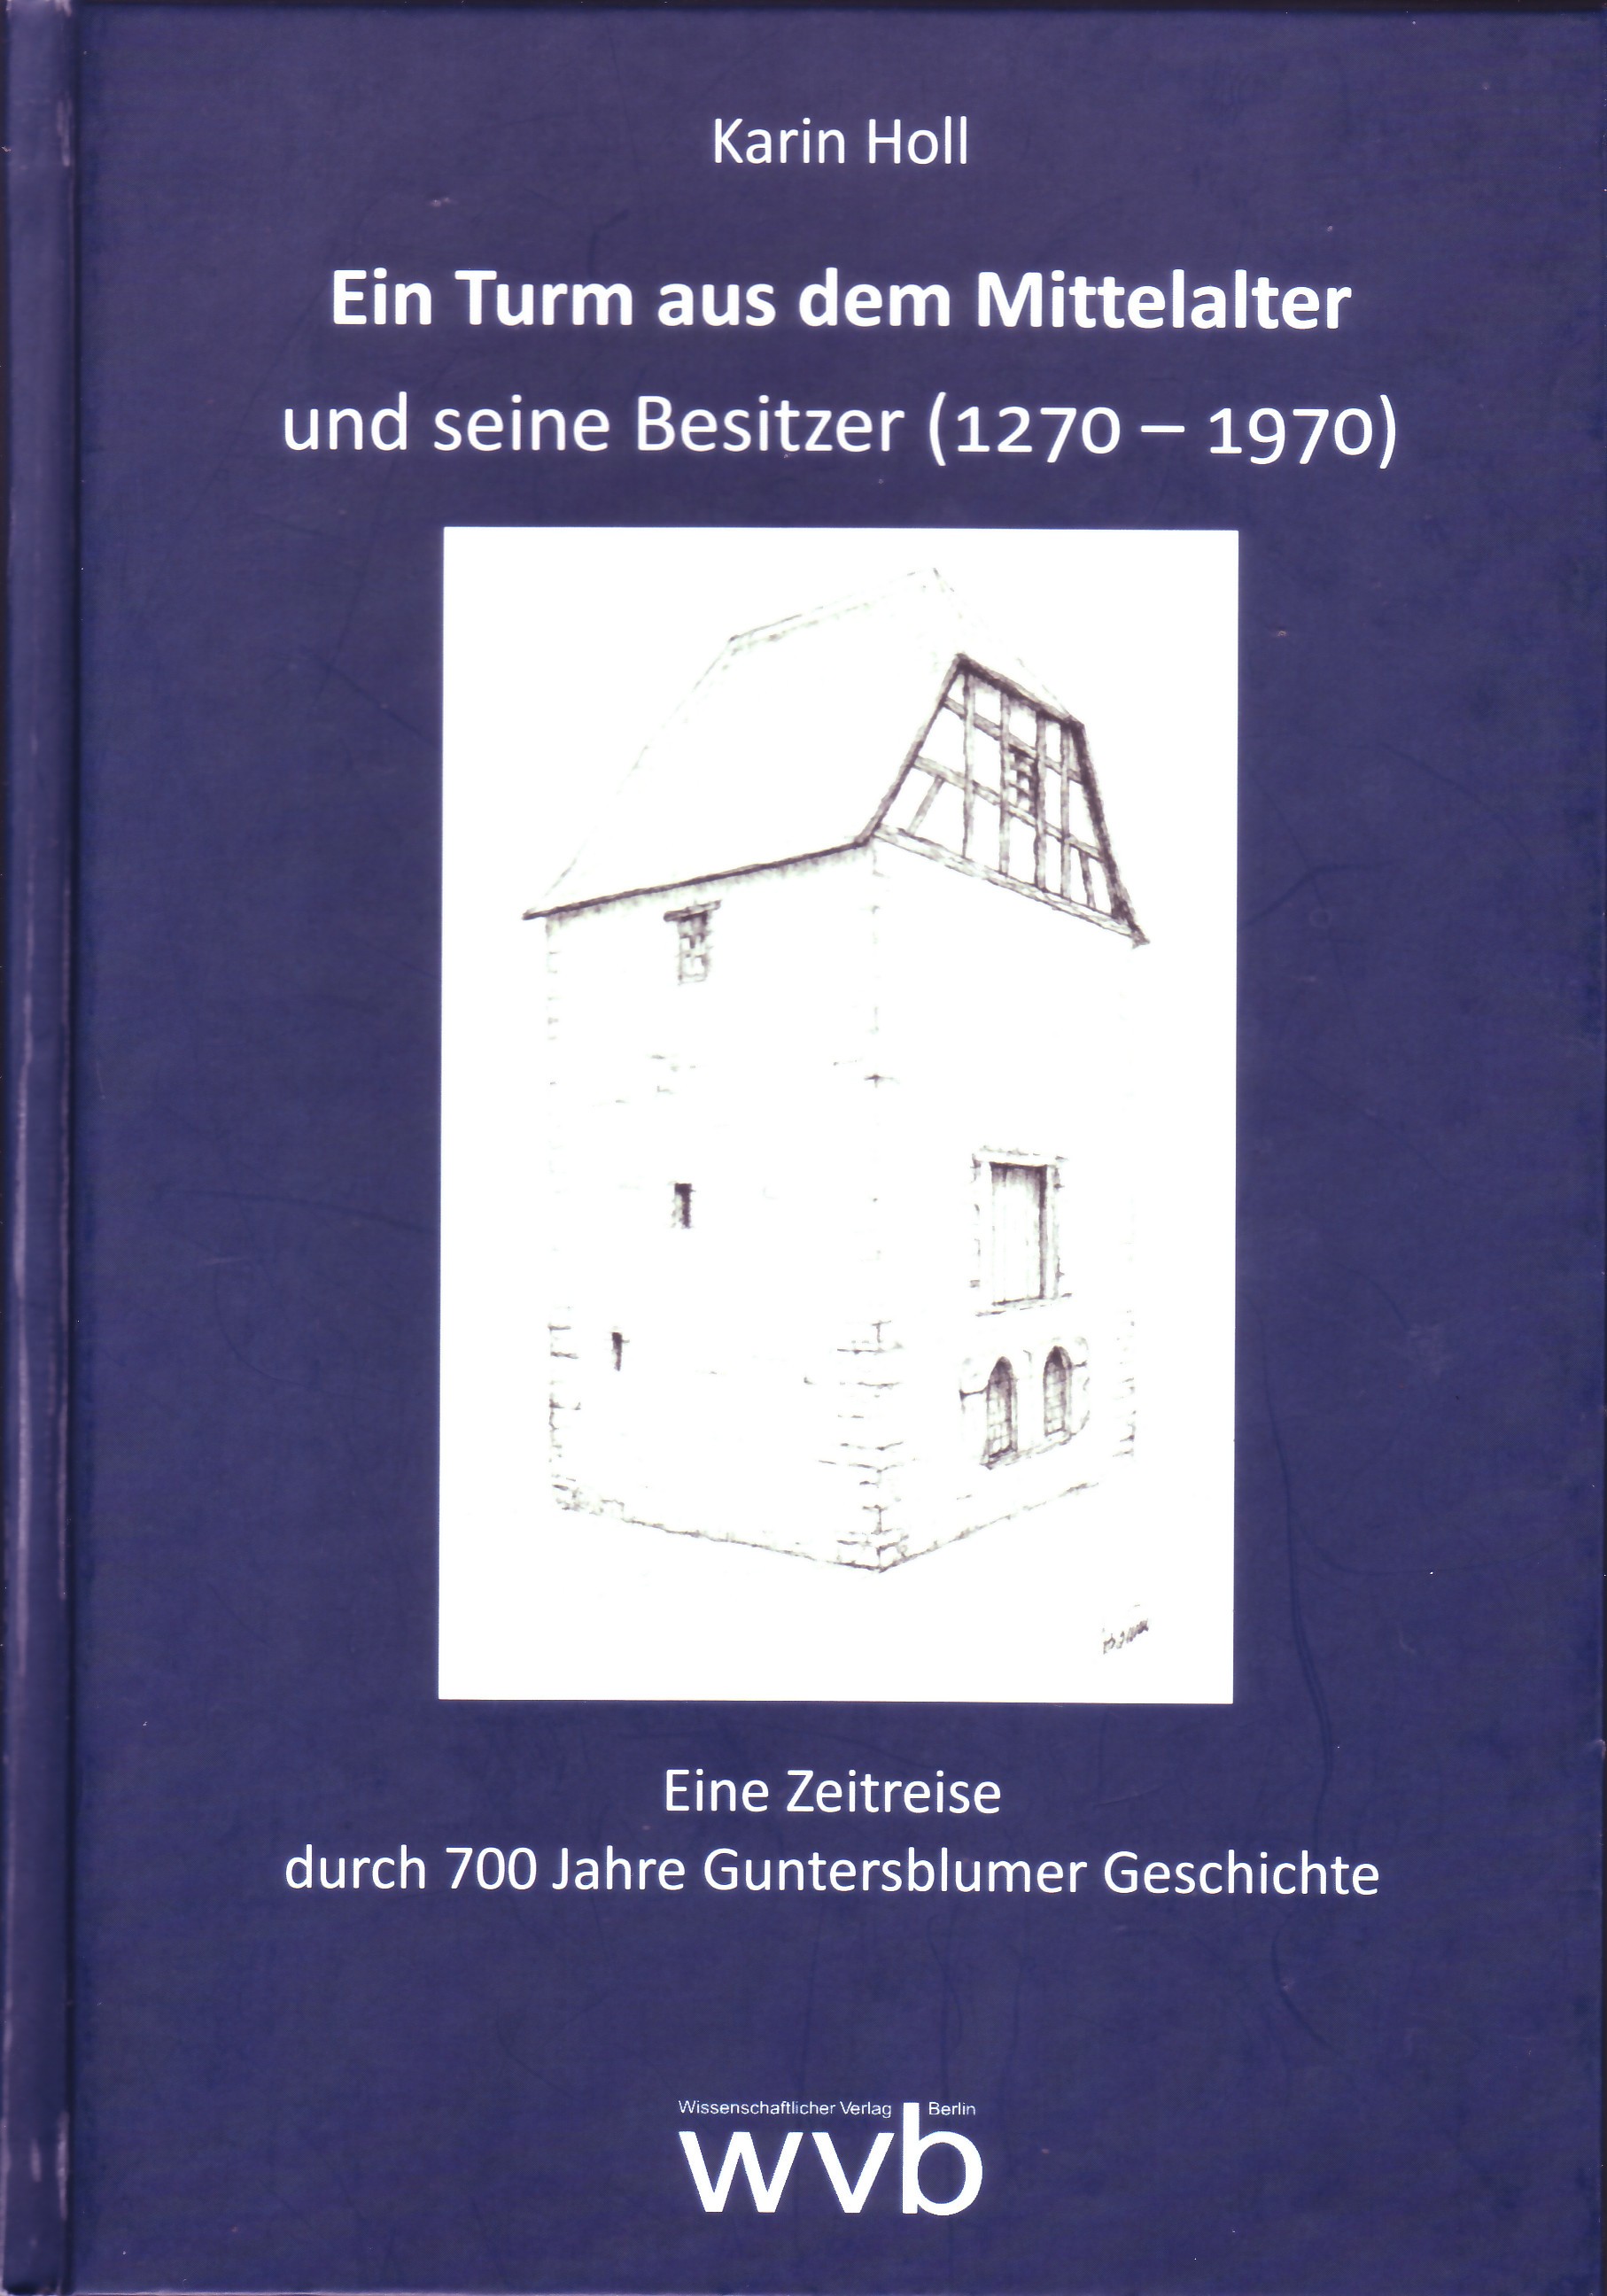 Ein Turm aus dem Mittelalter (1270 - 1970) (Kulturverein Guntersblum CC BY-NC-SA)